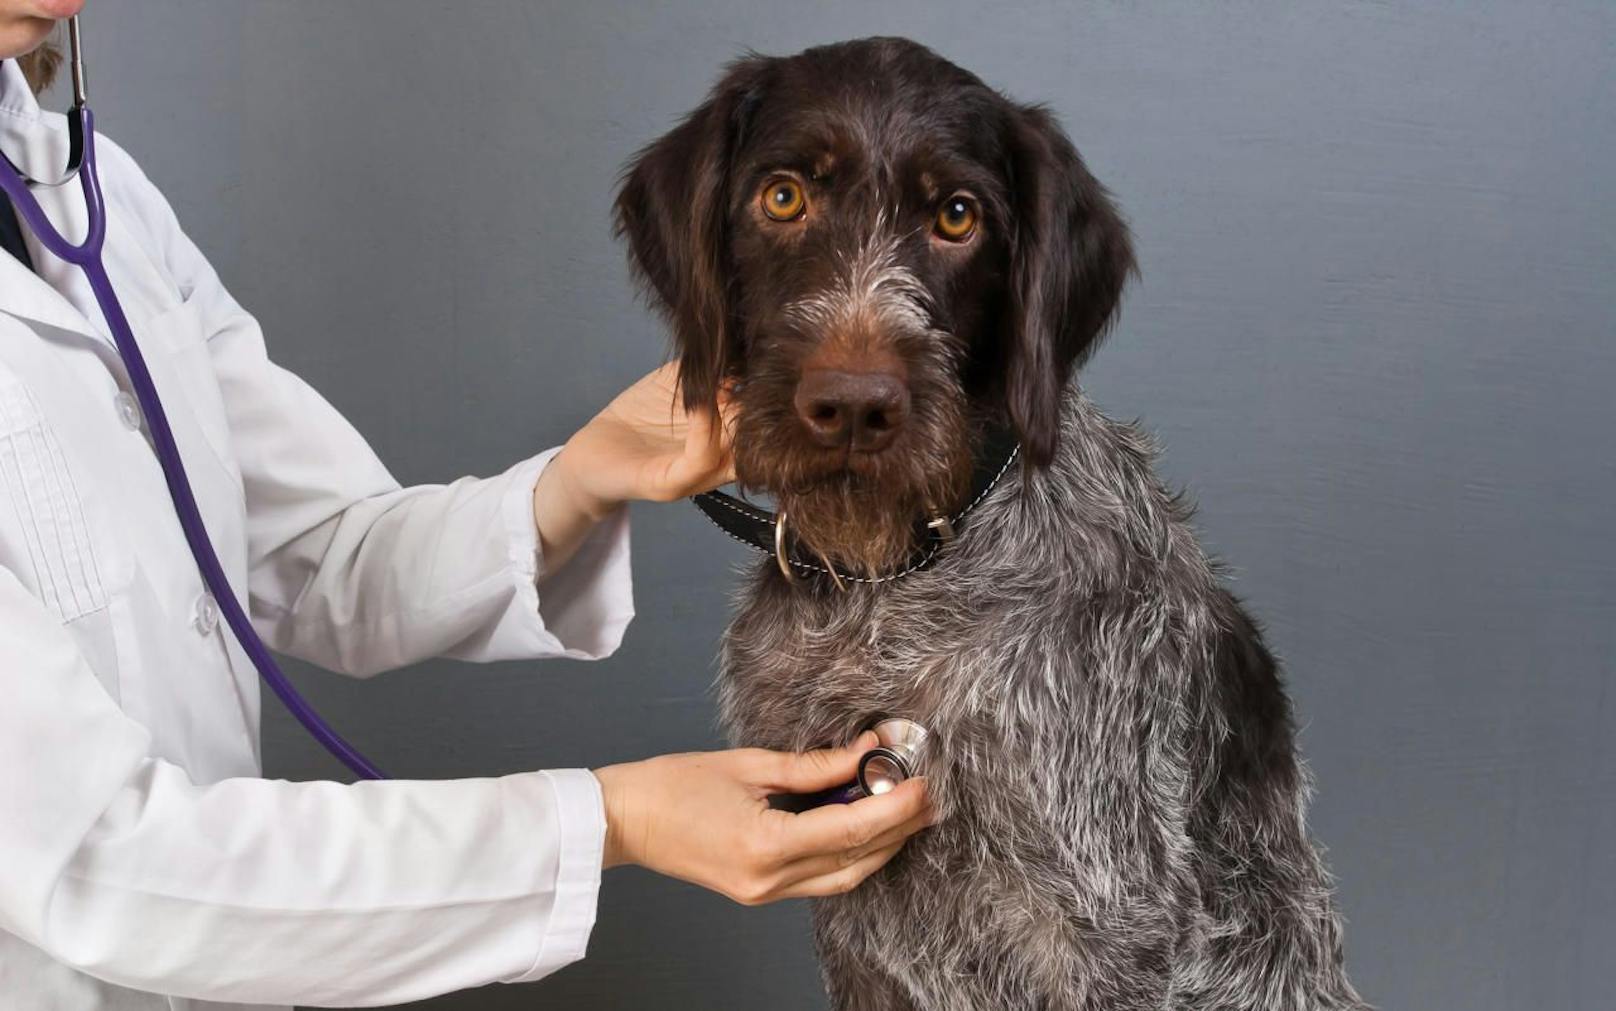 hands of vet examine dog with stethoscope in vet clinic